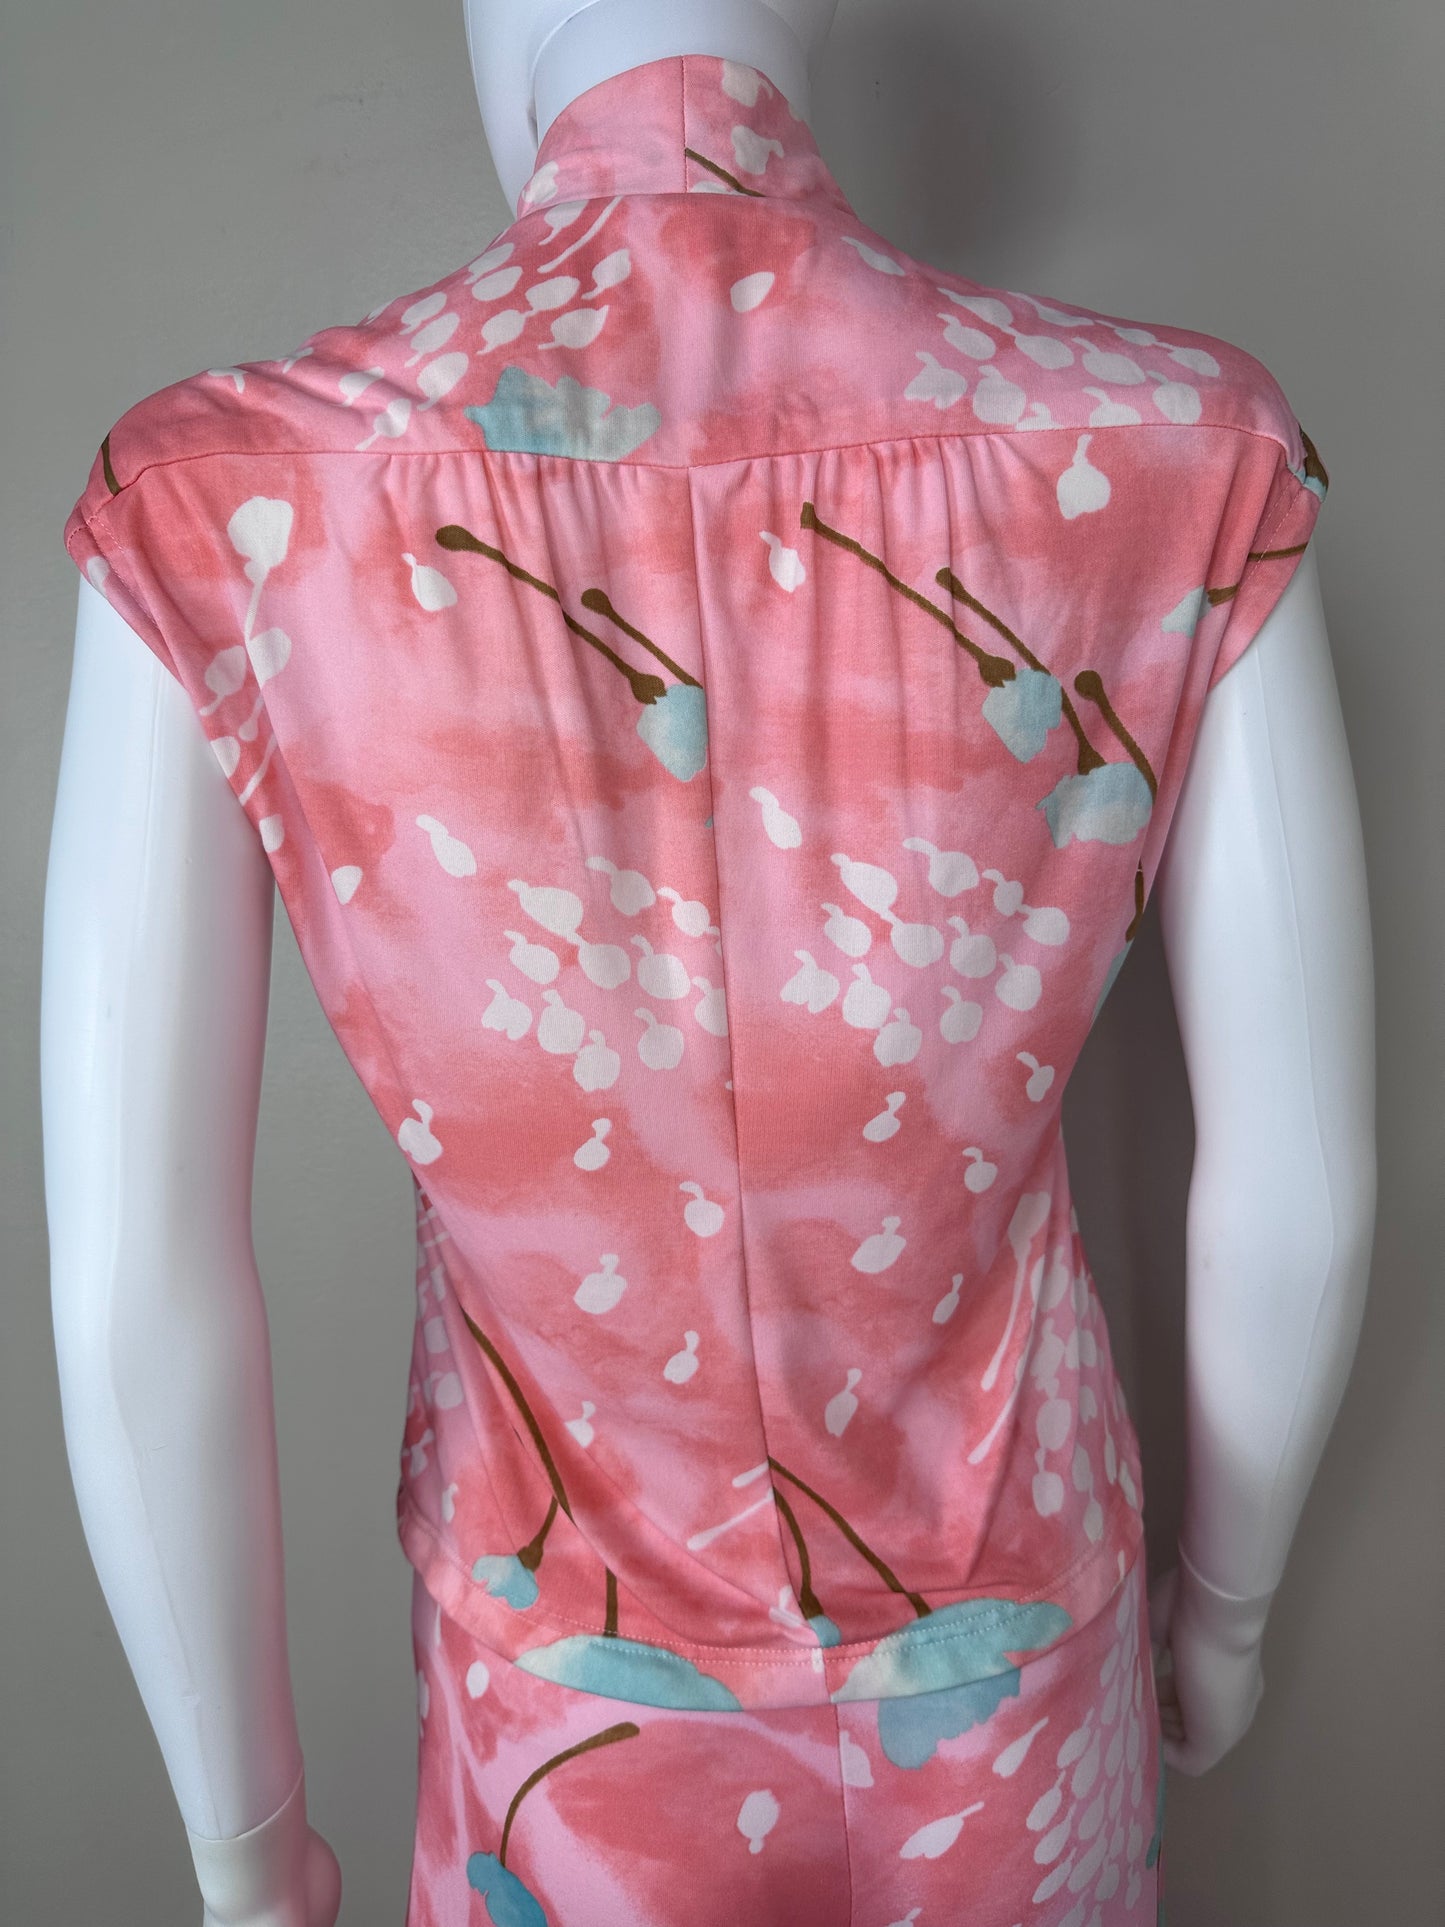 1970s Floral 3 Piece Set, Pant Suit, Leslie J Size Medium, Sleeveless Top, Long Sleeve Top